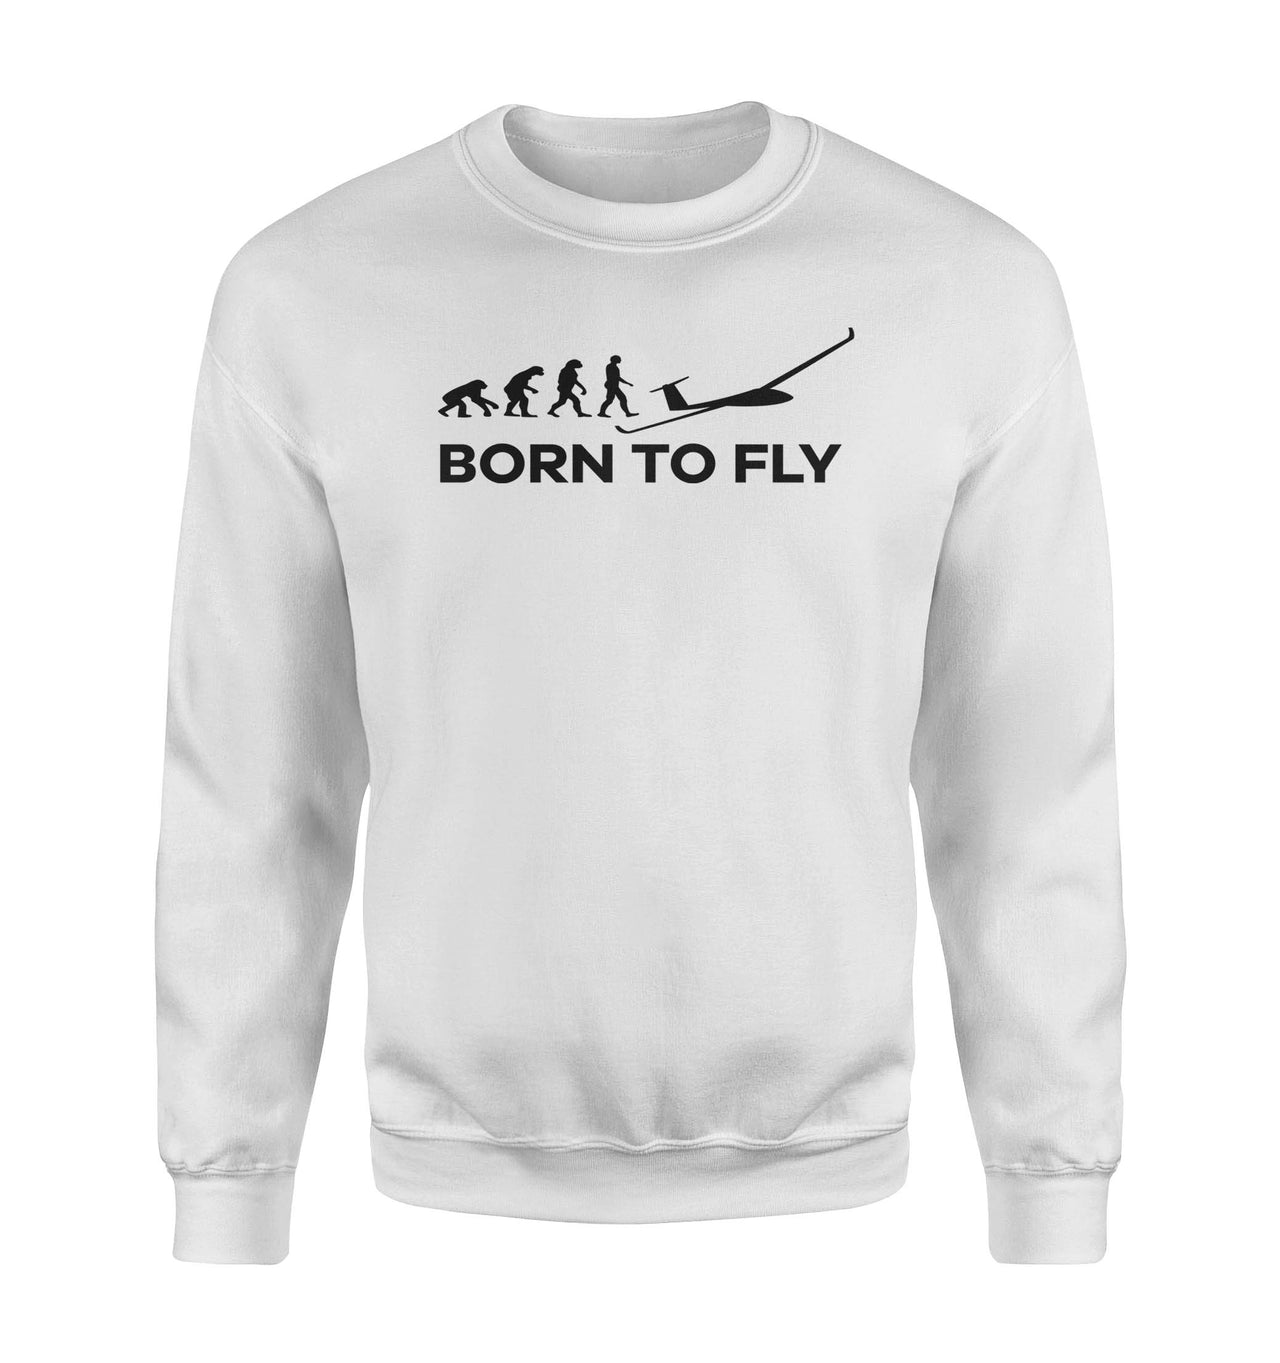 Born To Fly Glider Designed Sweatshirts